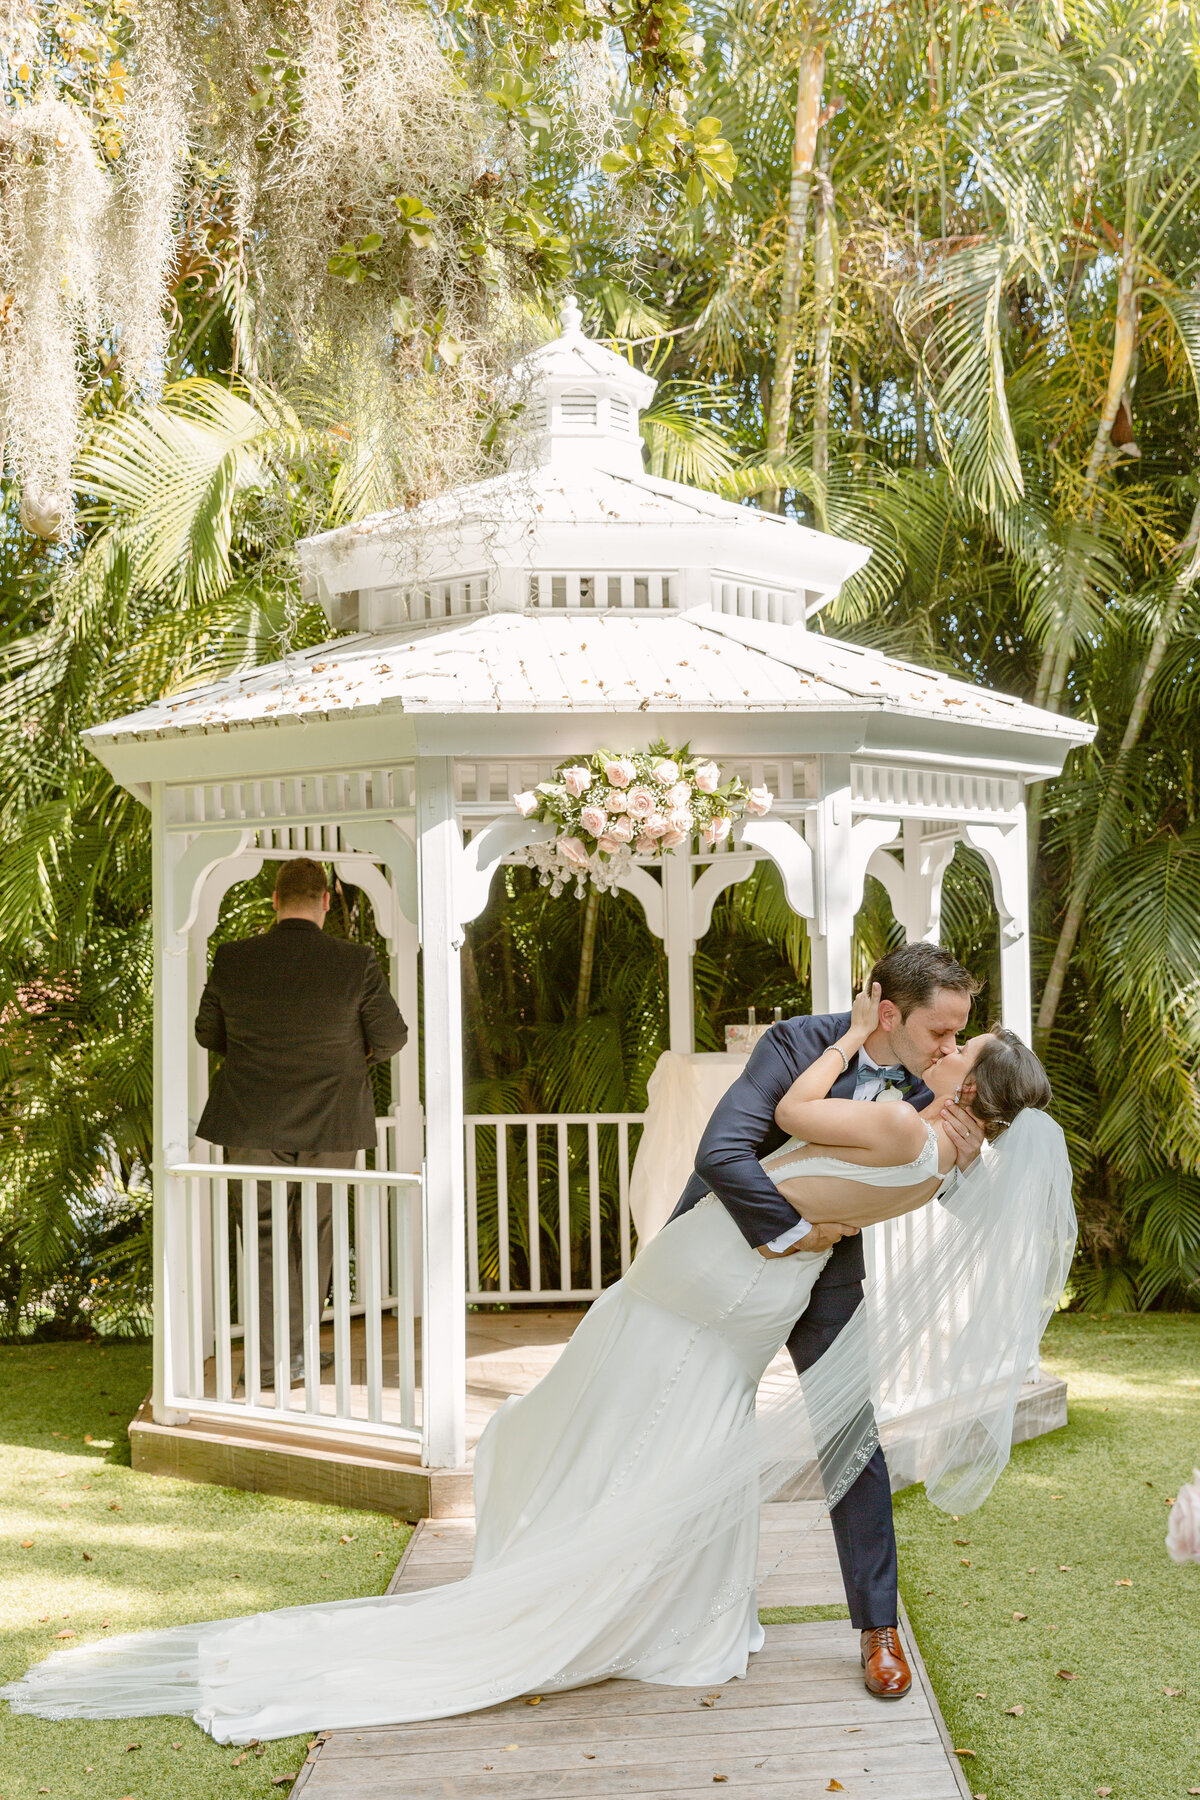 Wedding at Kilian Palms Country Club in Miami, Florida 18